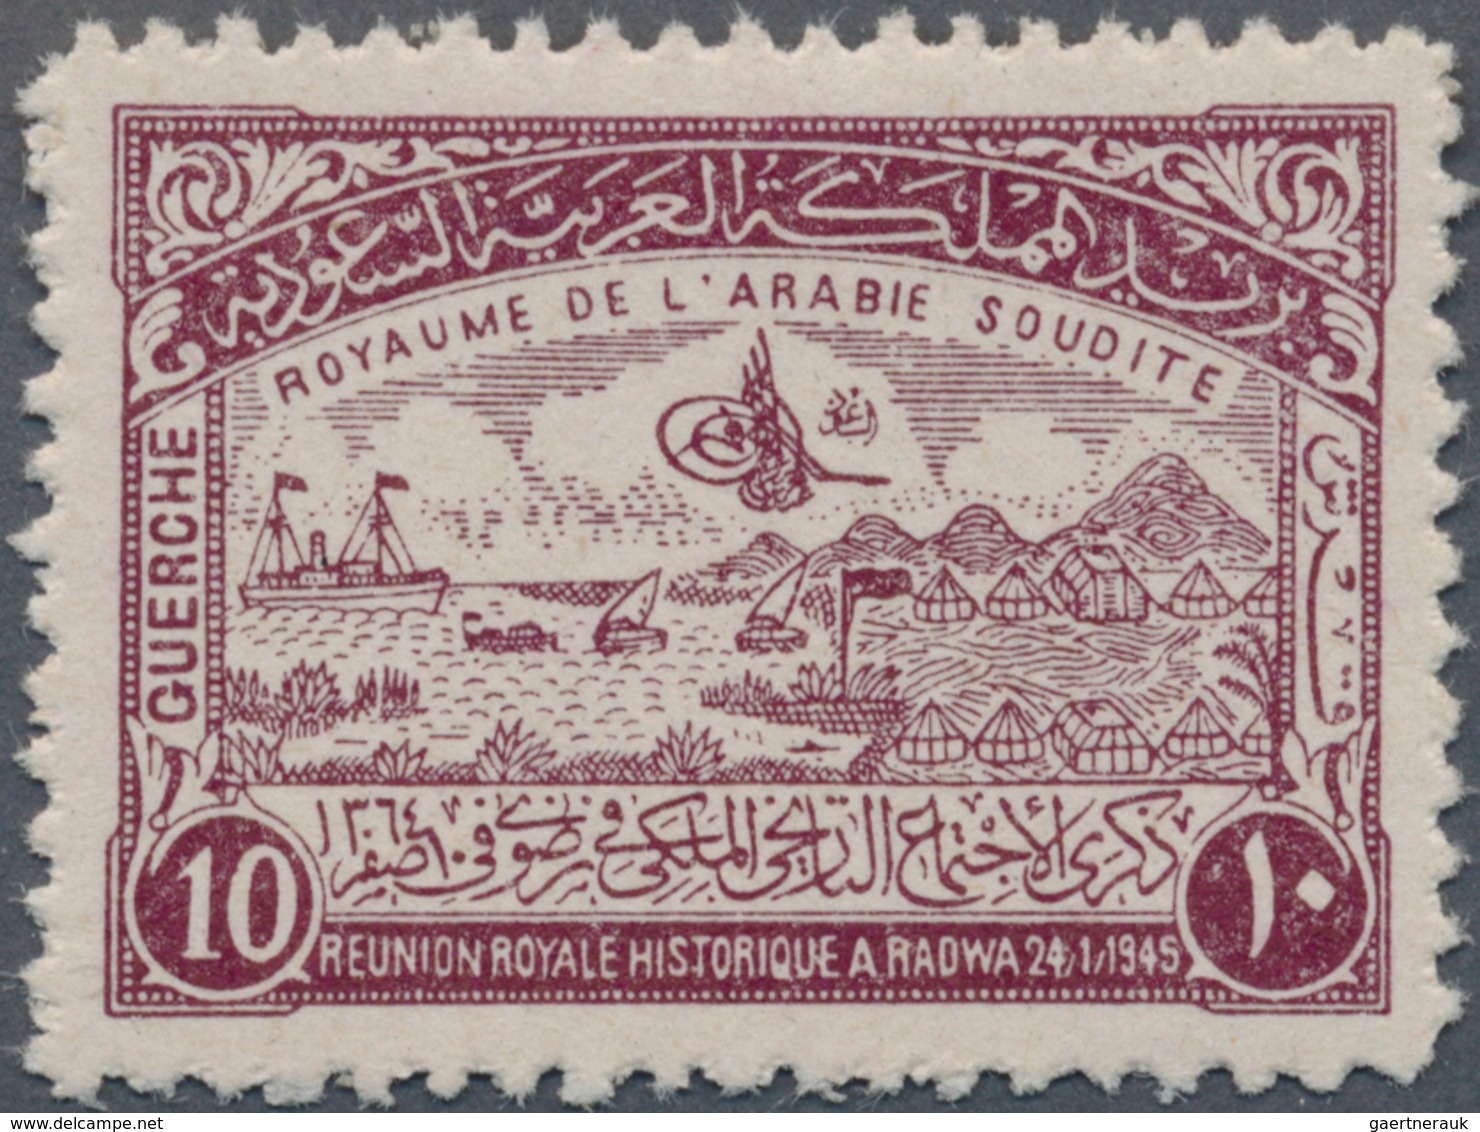 Saudi-Arabien - Hedschas: 1922-60, "HEJAZ & NEJD" Collection In Album Plus Some Later Issues, Bearin - Saudi Arabia